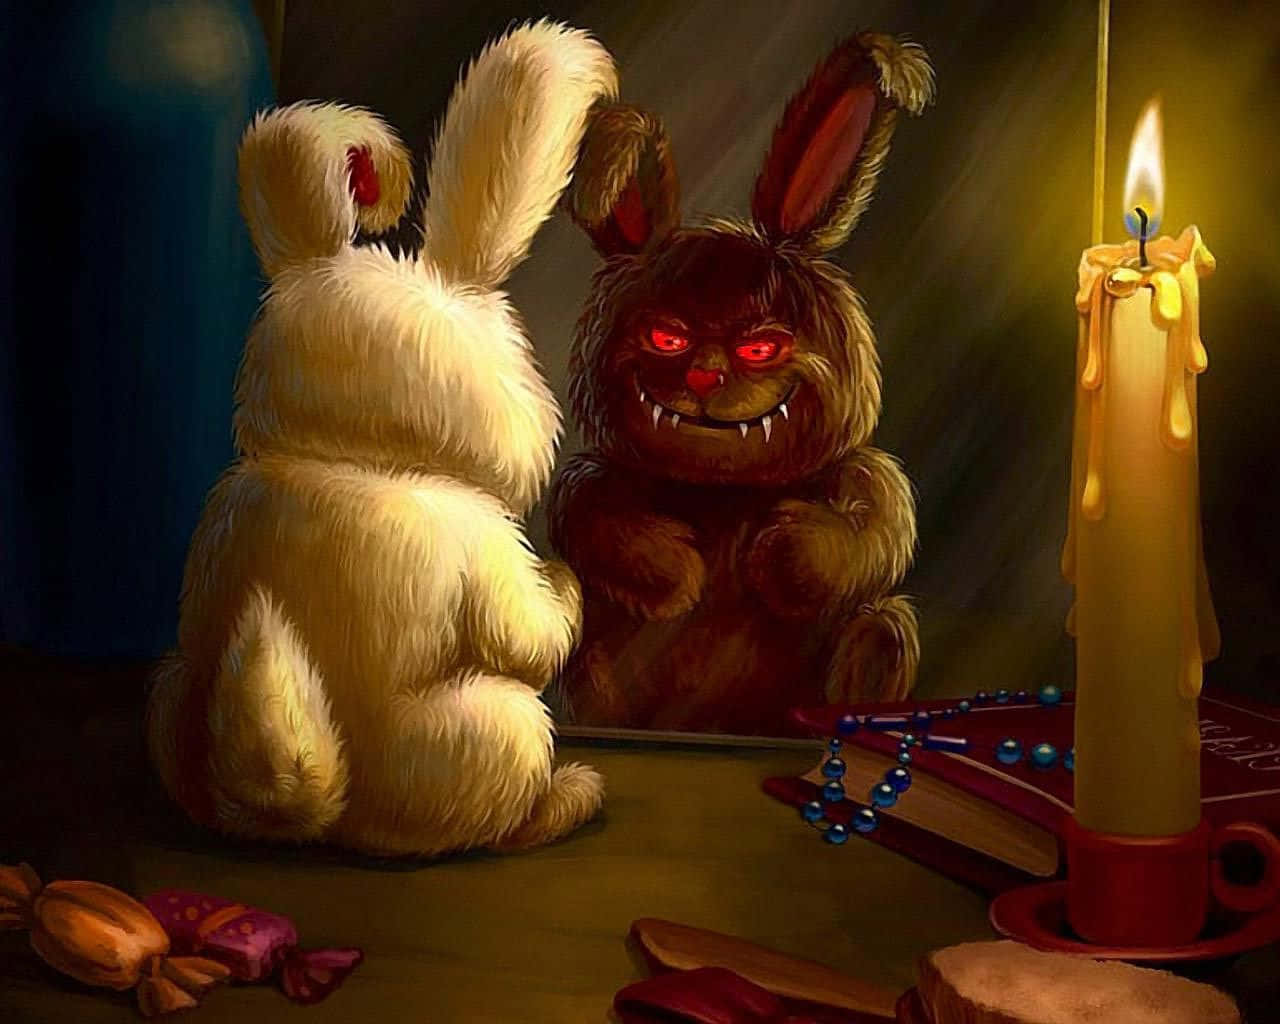 "Beware the Creepy Easter Bunny!"